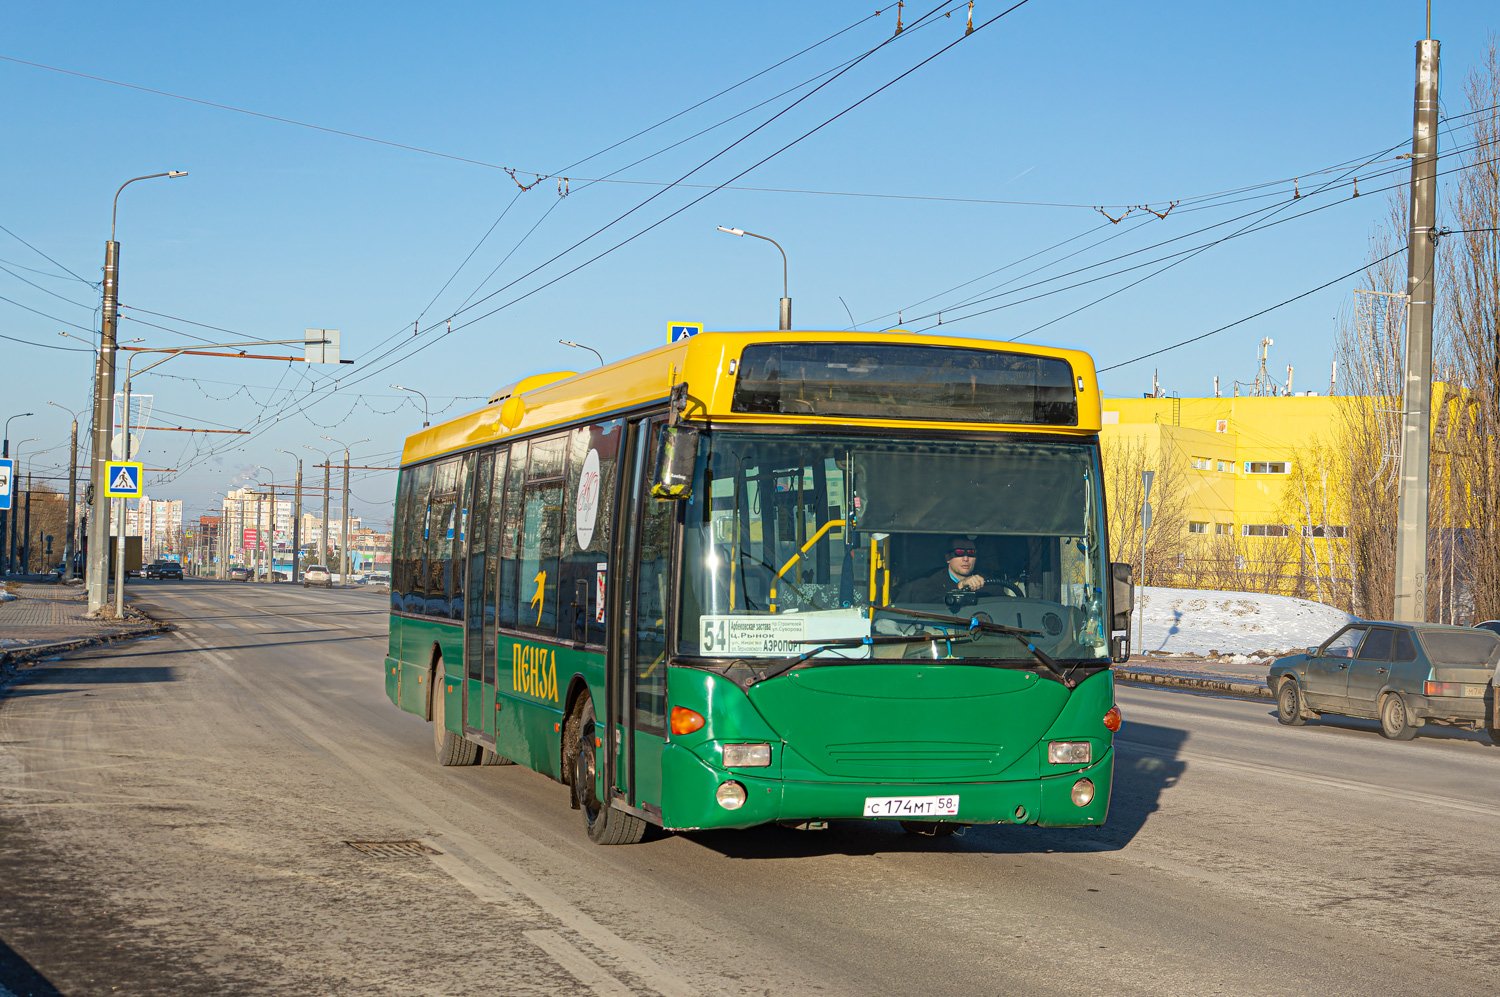 Penza region, Scania OmniLink I (Scania-St.Petersburg) # С 174 МТ 58